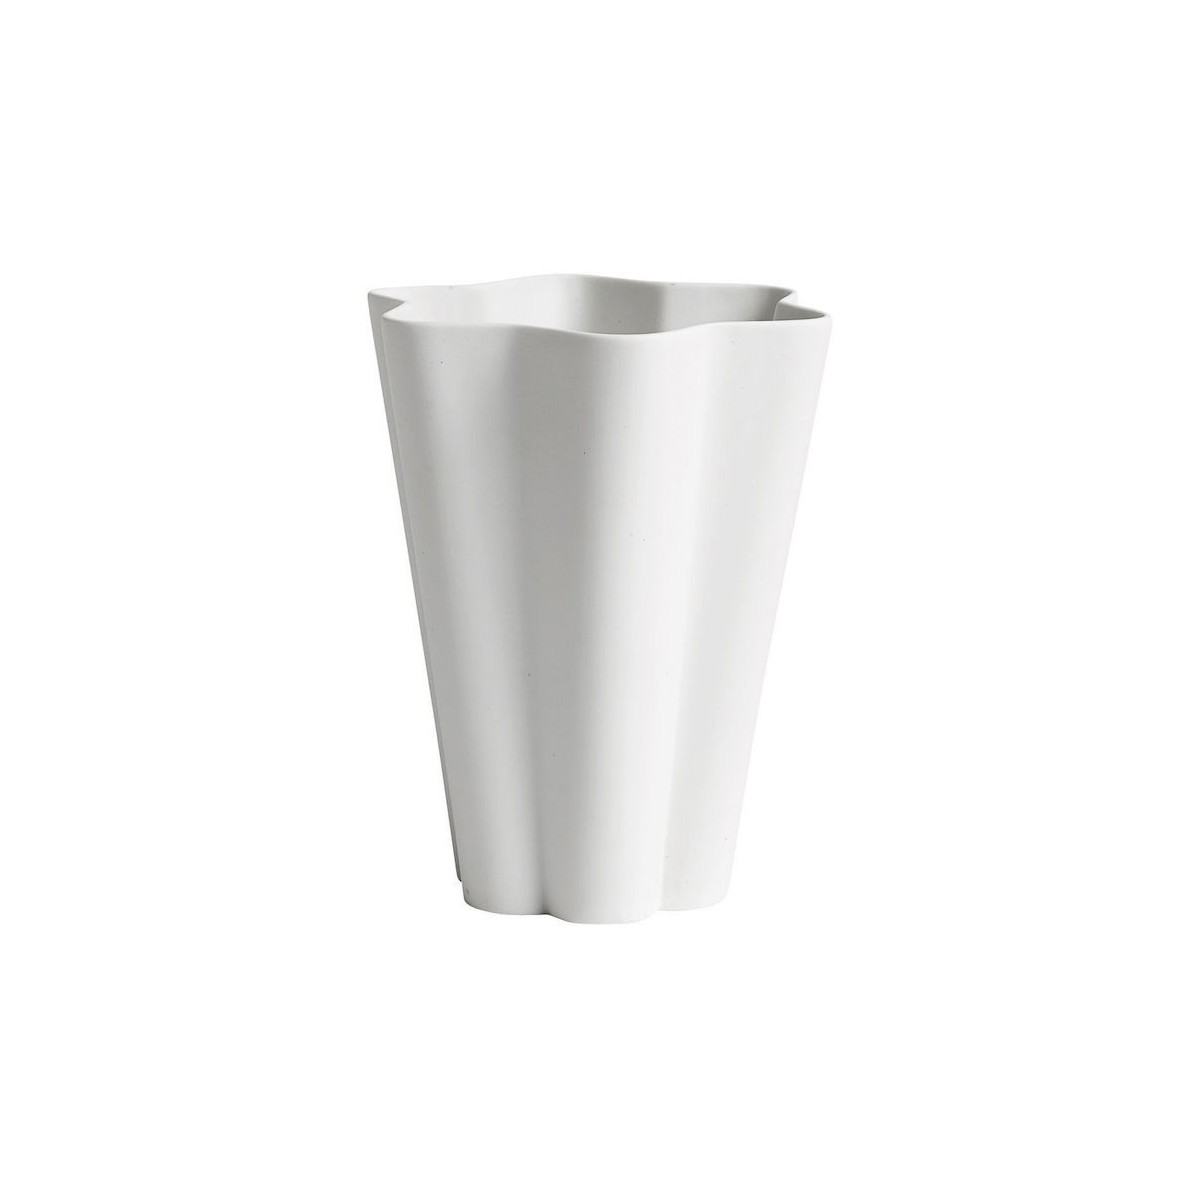 L - off white - Iris vase